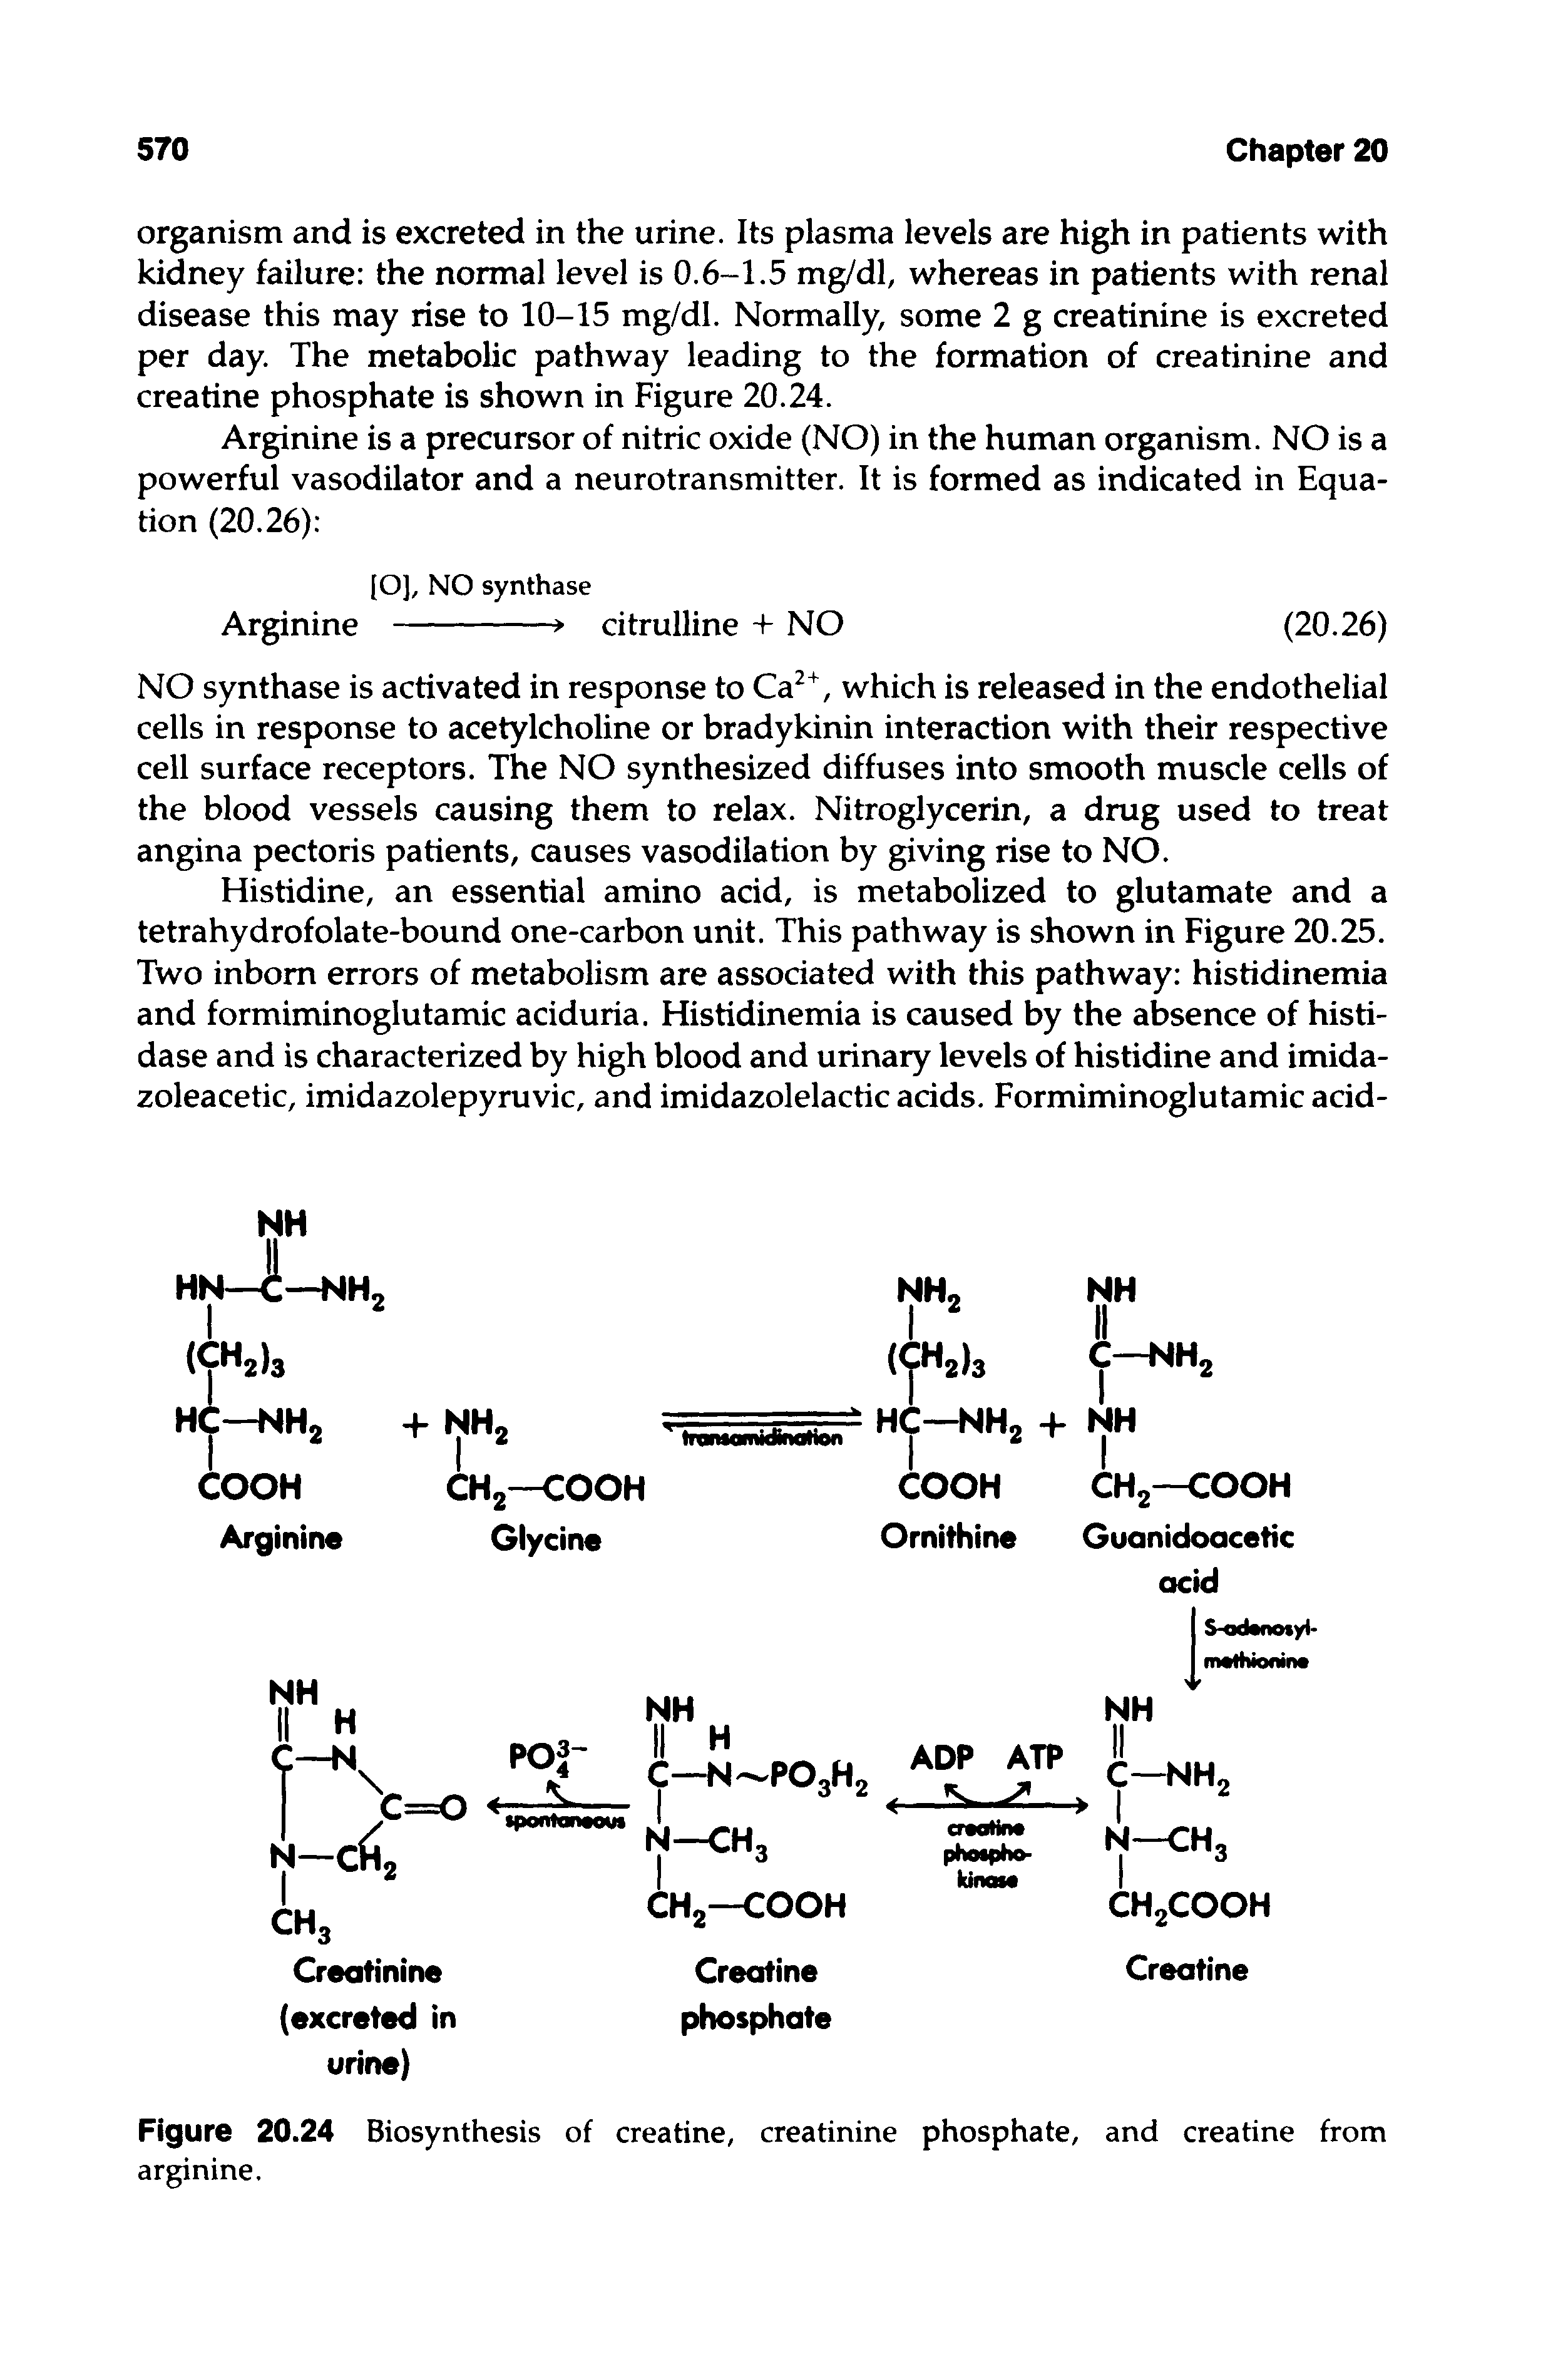 Figure 20.24 Biosynthesis of creatine, creatinine phosphate, and creatine from arginine.